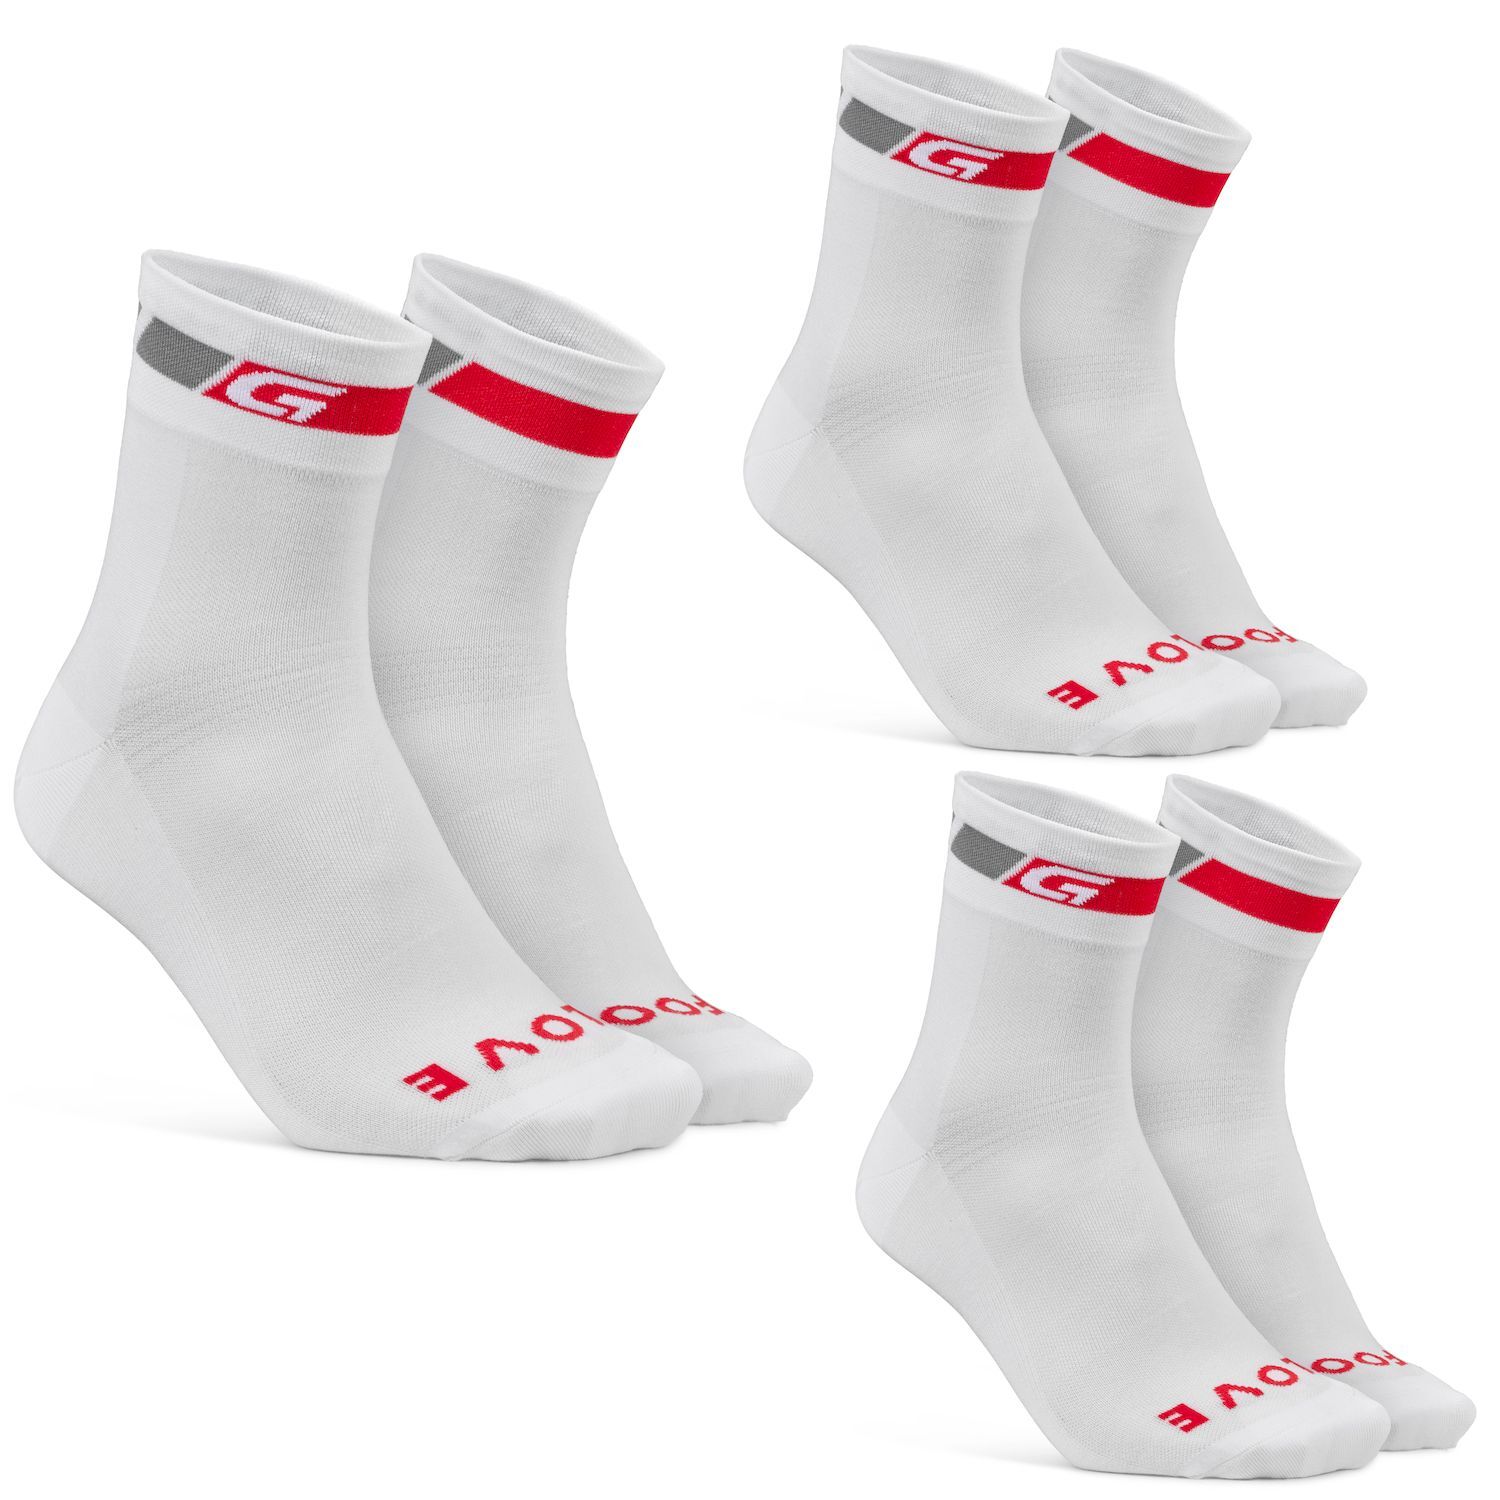 Grip Grab Classic Regular Cut Socks 3 Pack - Cycling socks